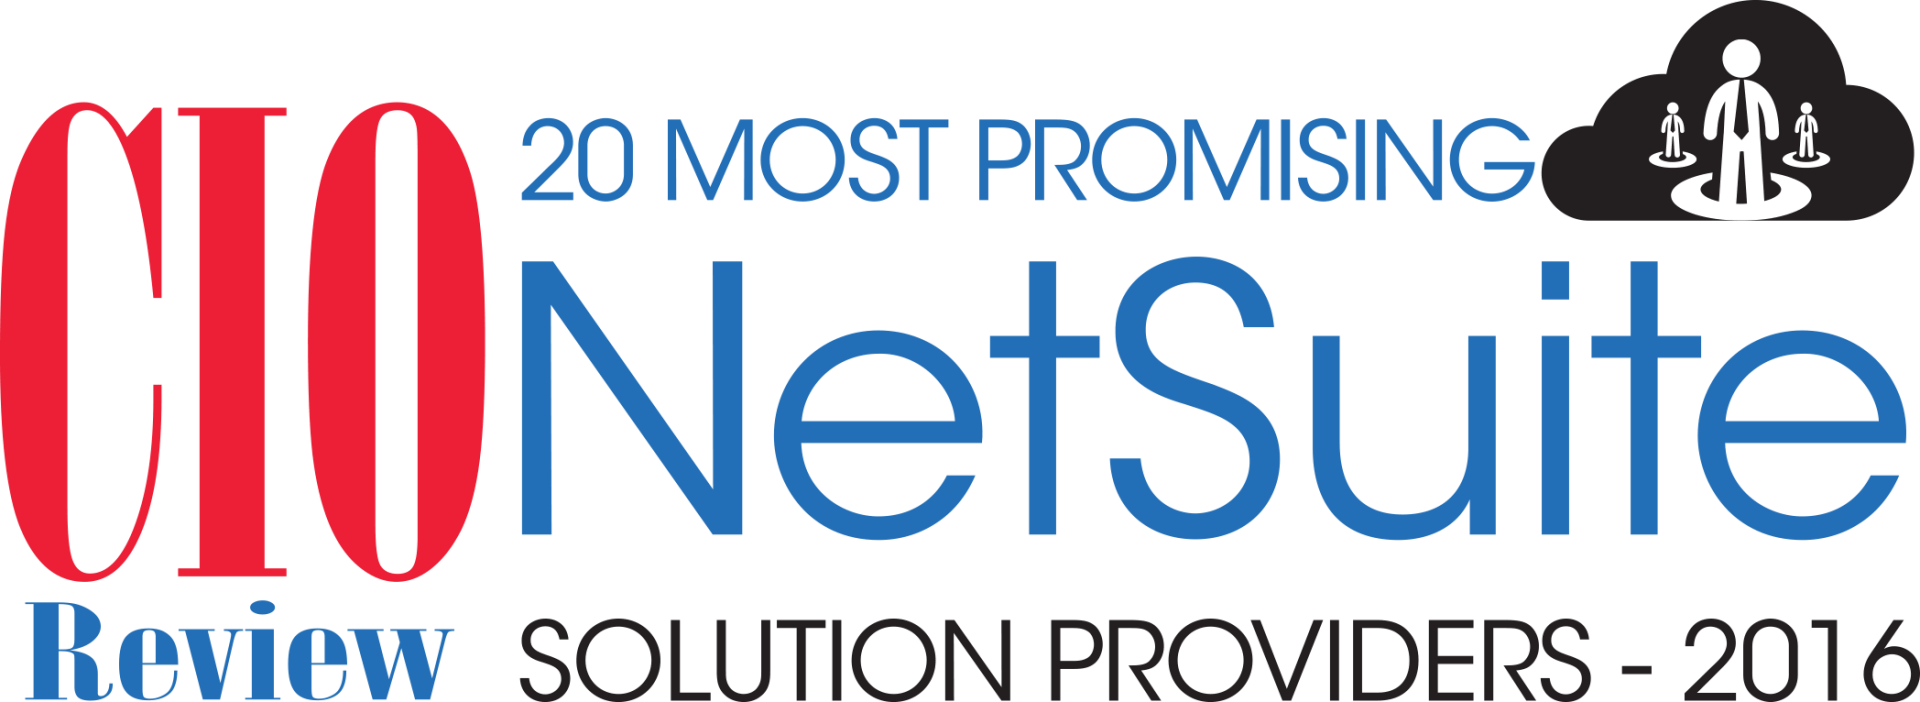 CIO Net Suite review